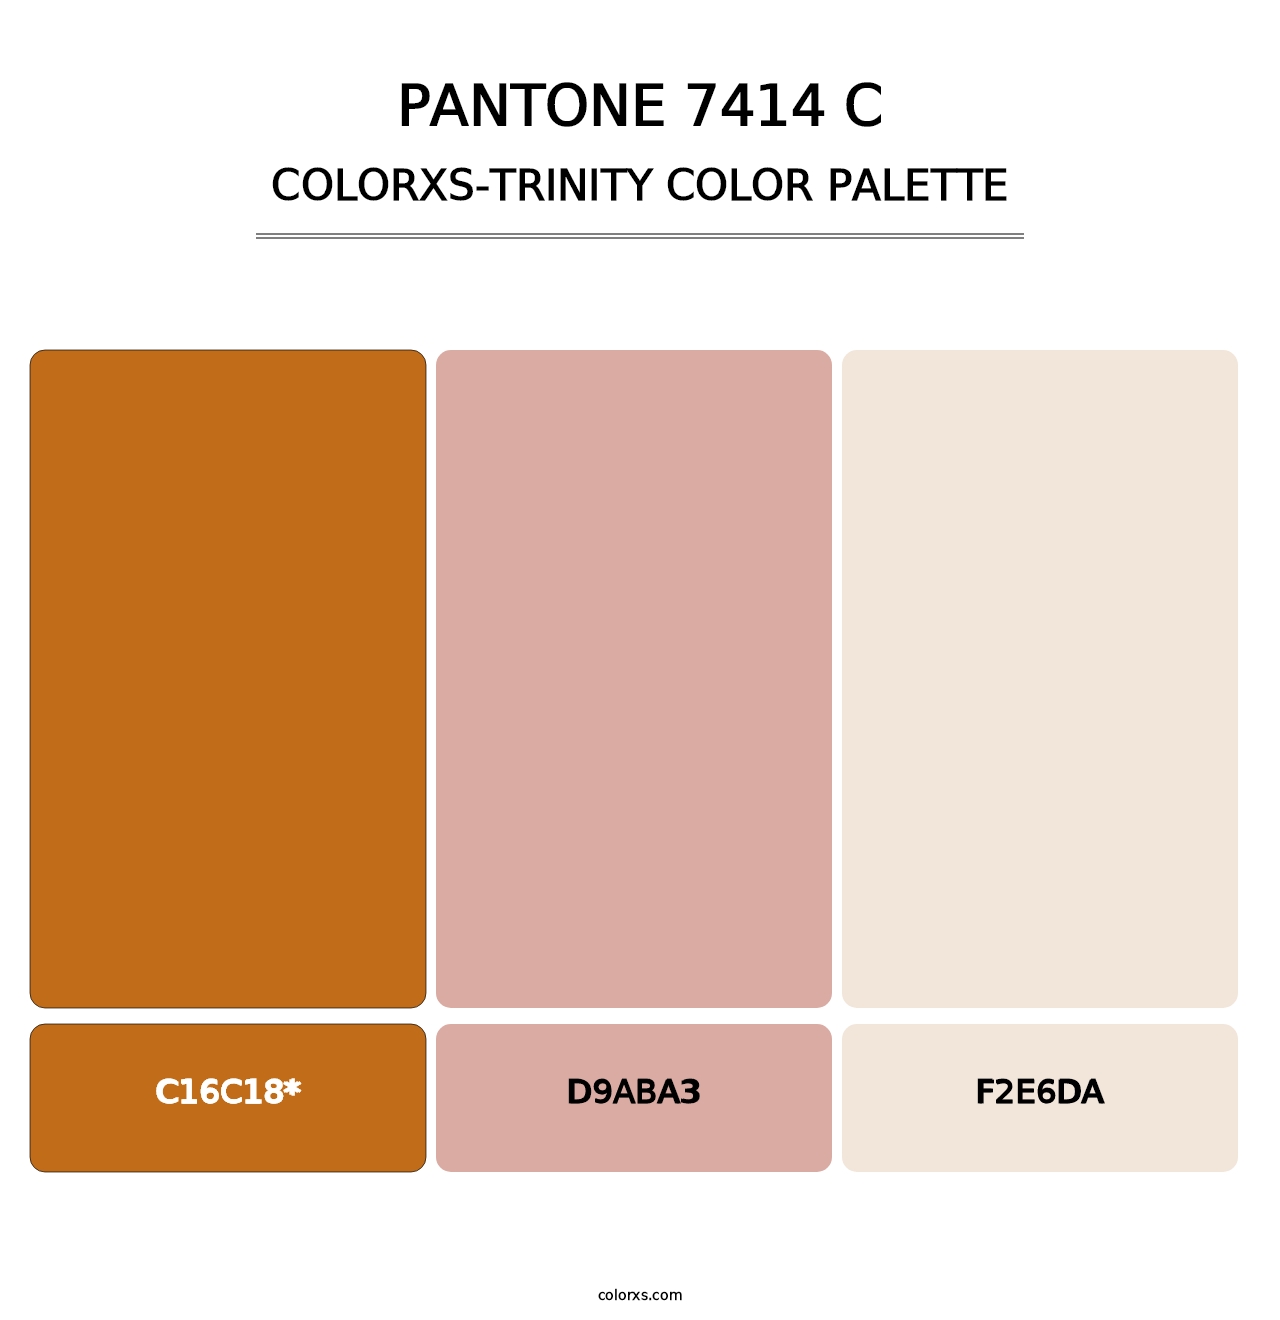 PANTONE 7414 C - Colorxs Trinity Palette